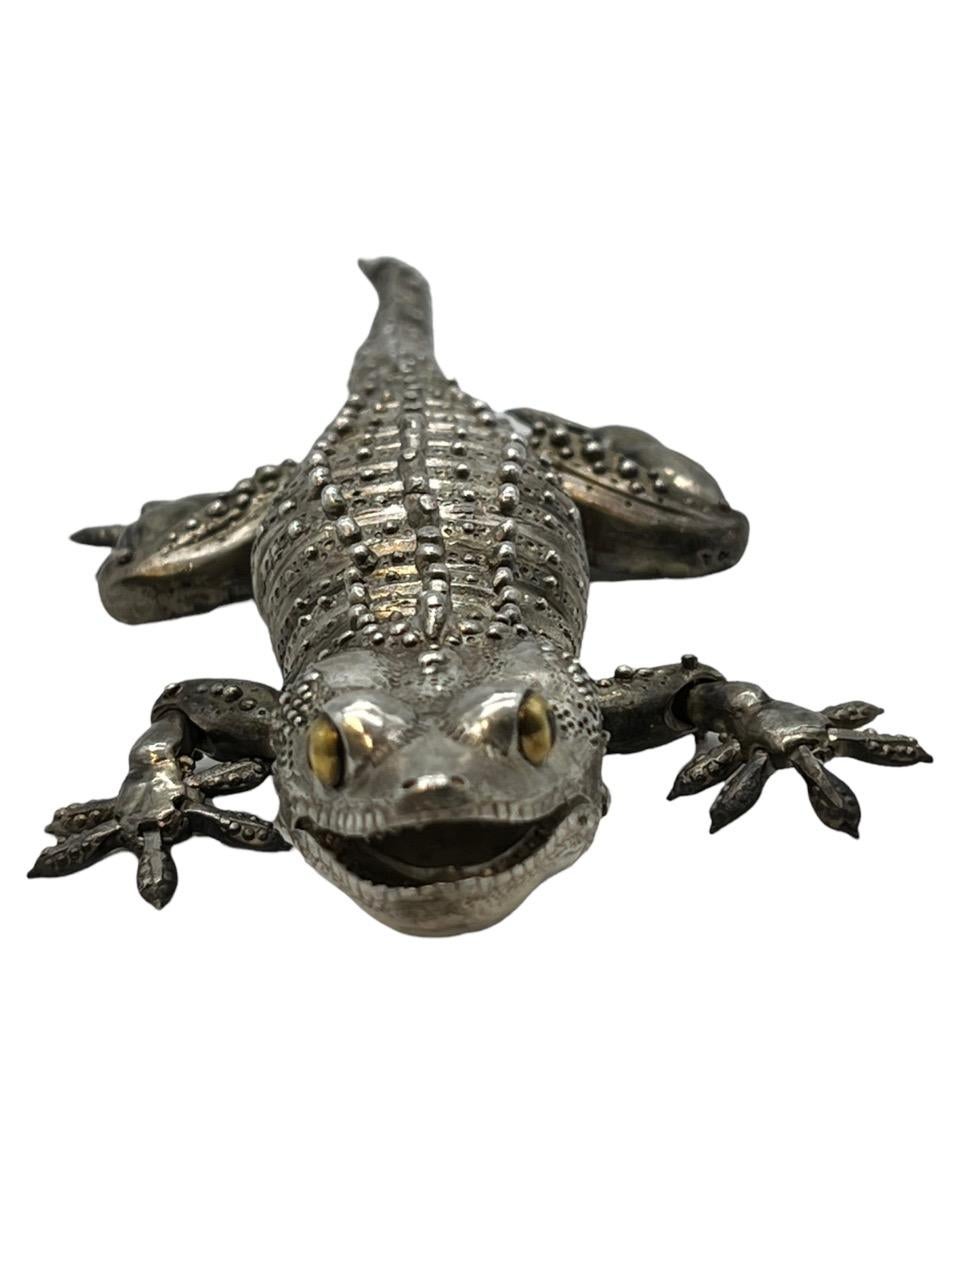 Oleg Konstantinov Fully Articulated Gecko Made of Sterling Silver 5